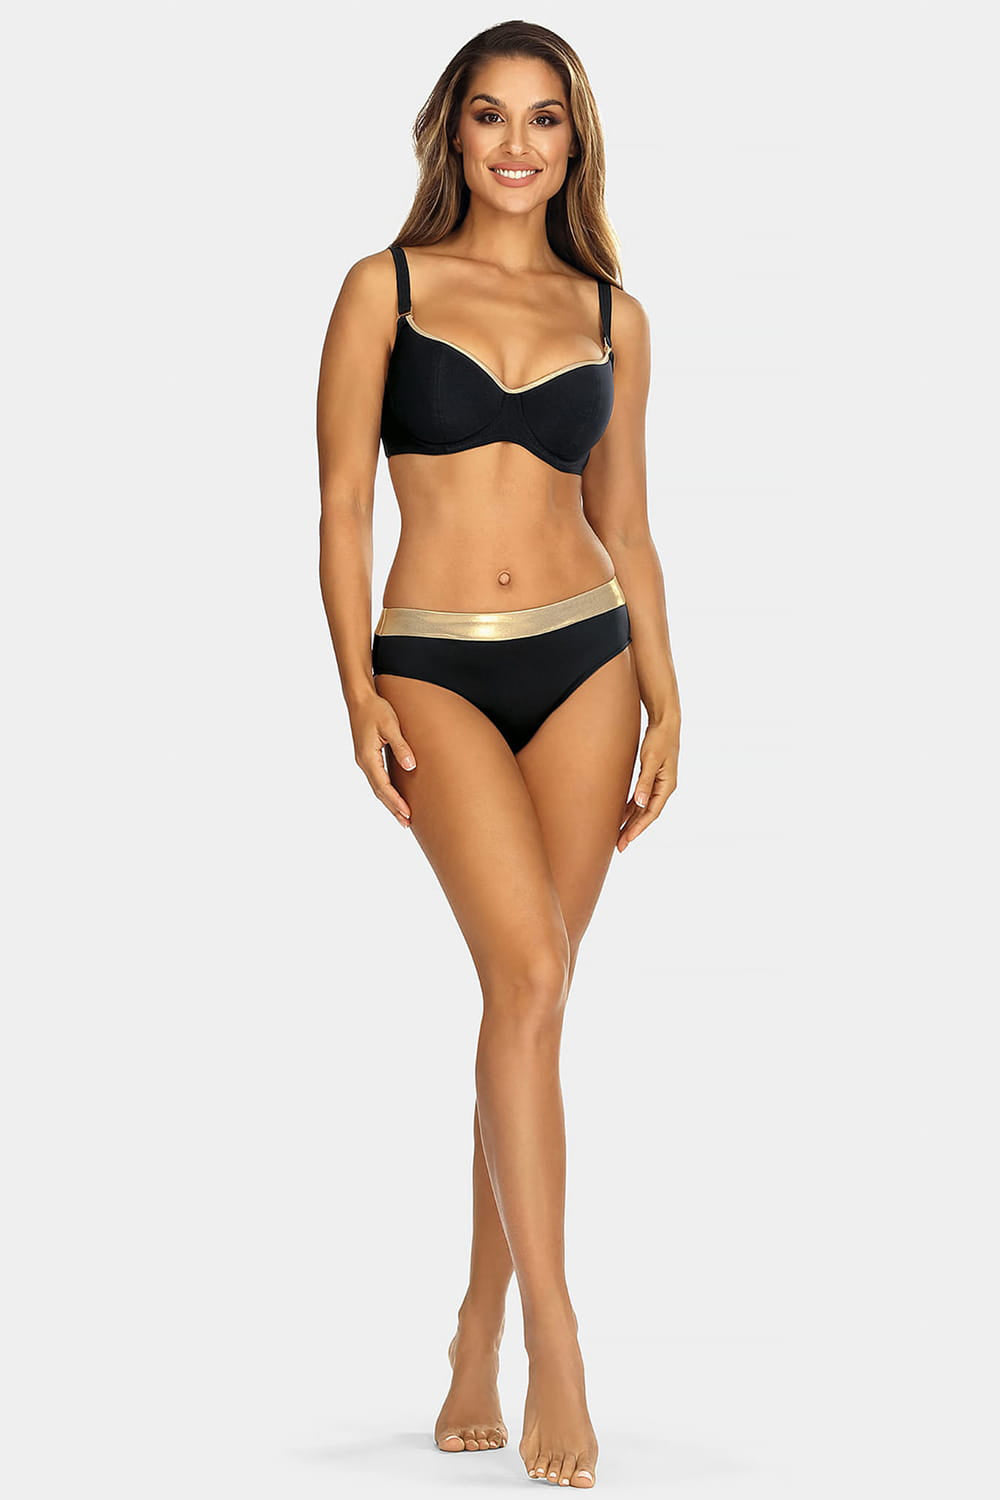 Axami Luxury Swimwear F105 Balconette Bikini Top Black/Gold